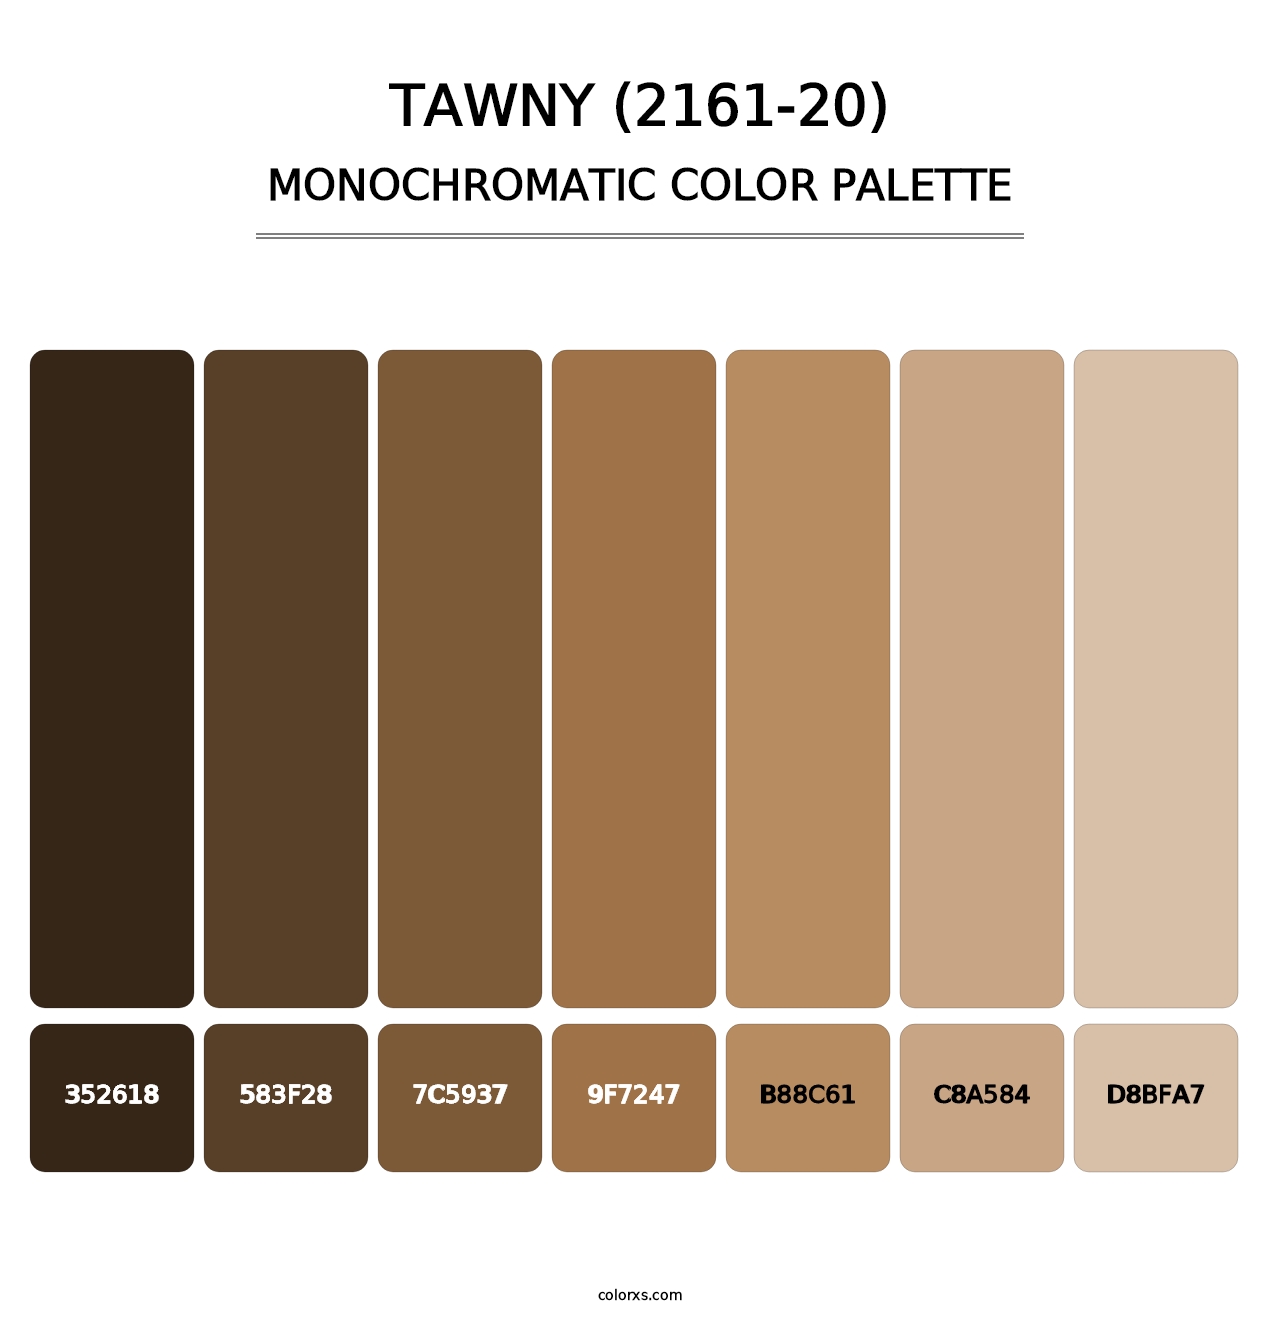 Tawny (2161-20) - Monochromatic Color Palette